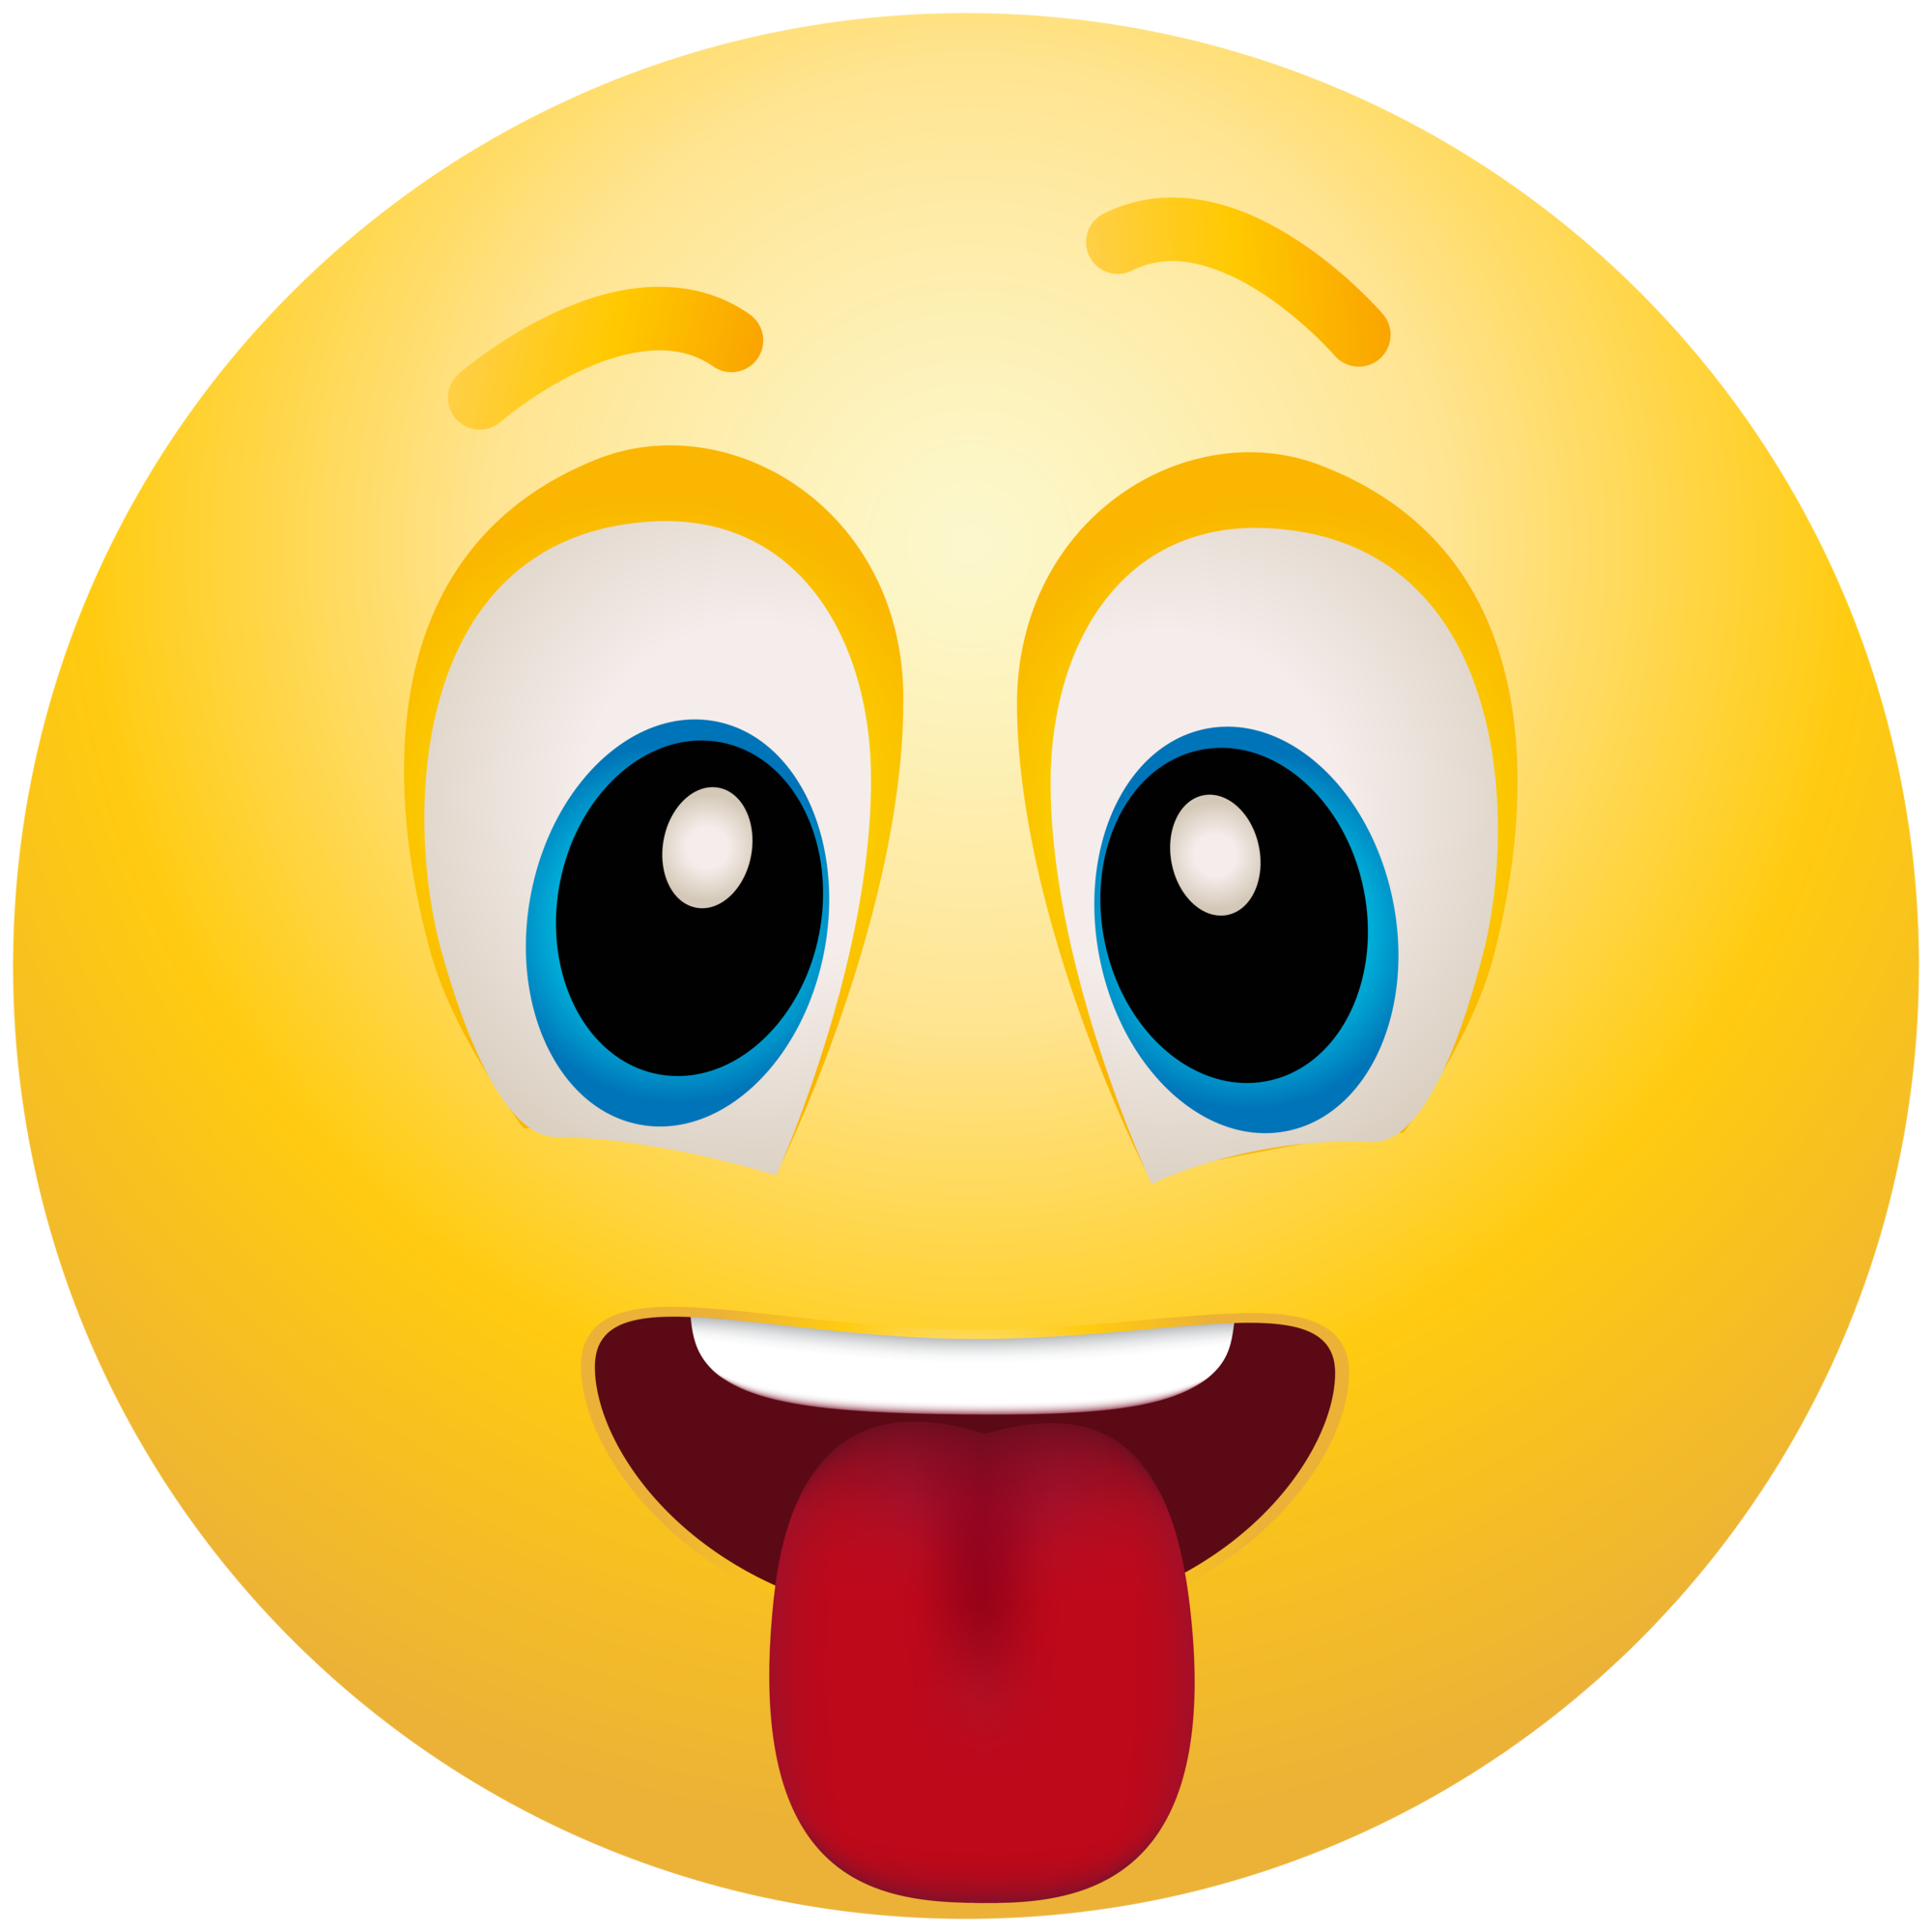 Tongue Out Emoticon Emoji Clipart 